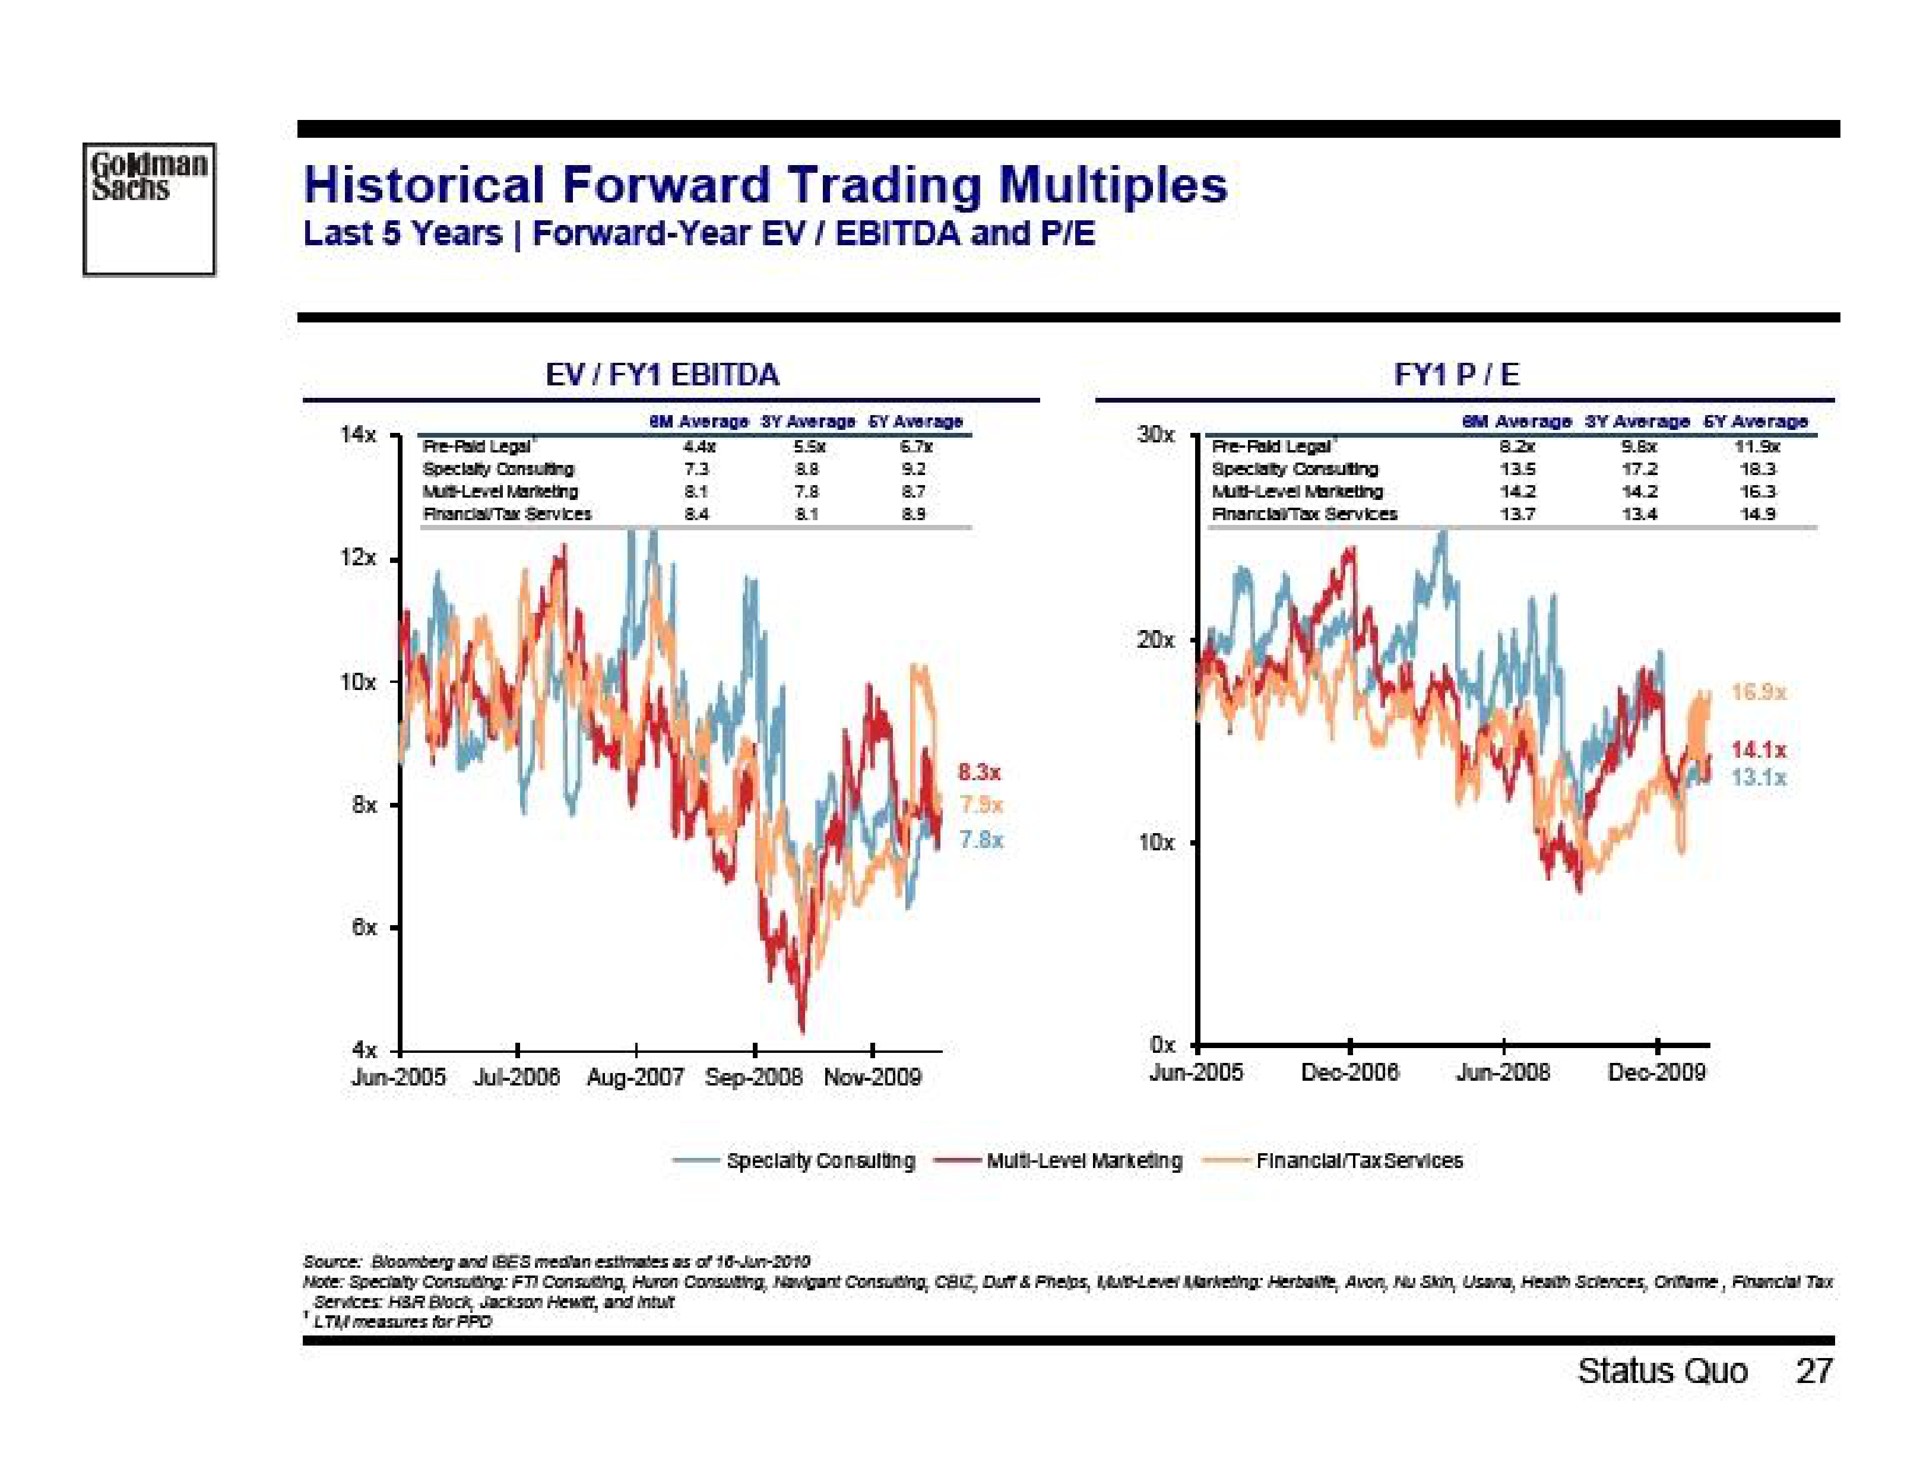 historical forward trading multiples | Goldman Sachs